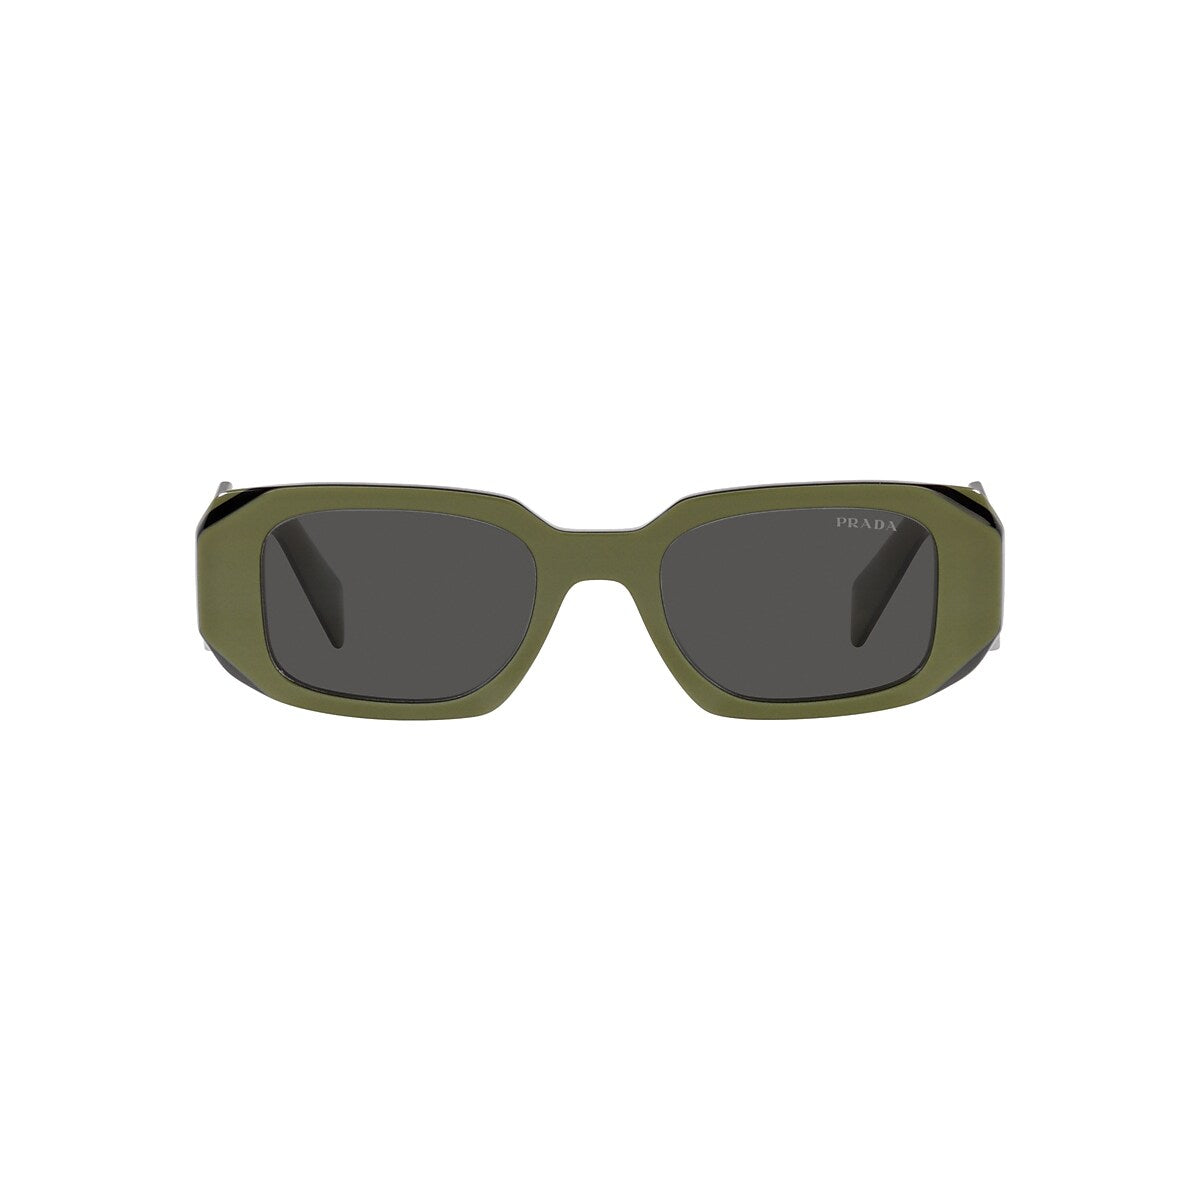 PRADA PR 17WS Sage/Black - Women Luxury Sunglasses, Dark Grey Lens